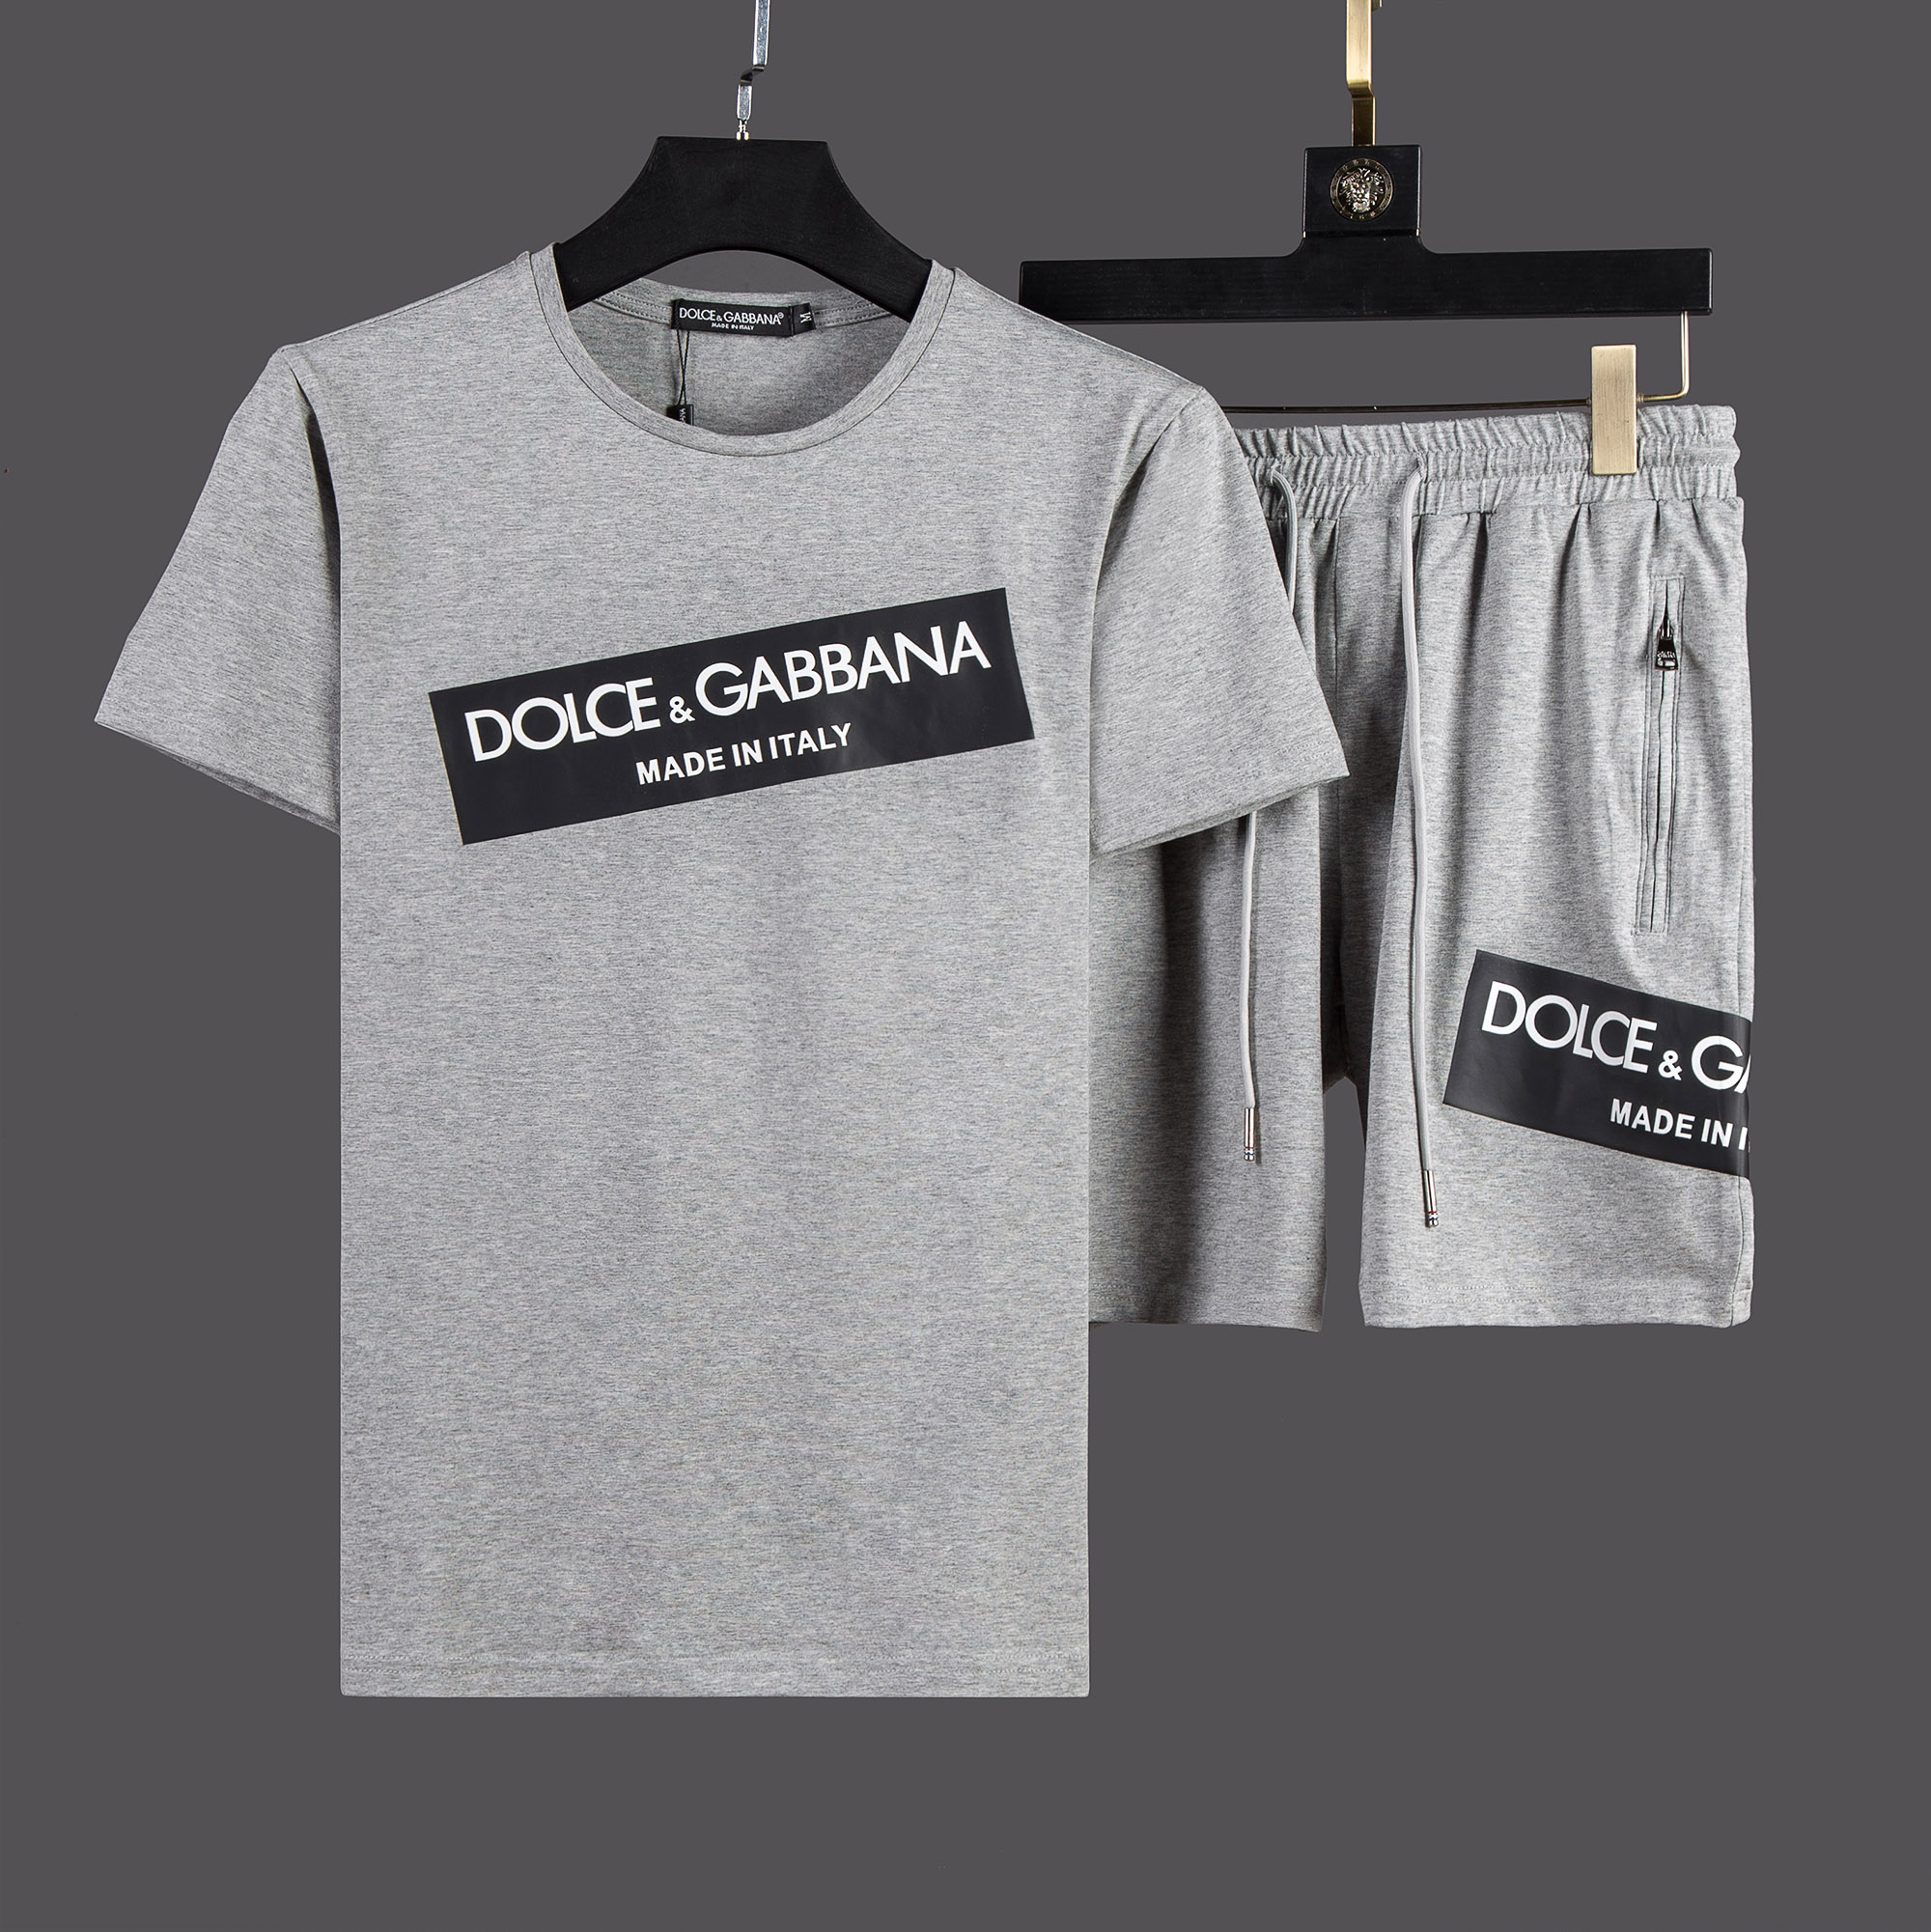 d & g clothing